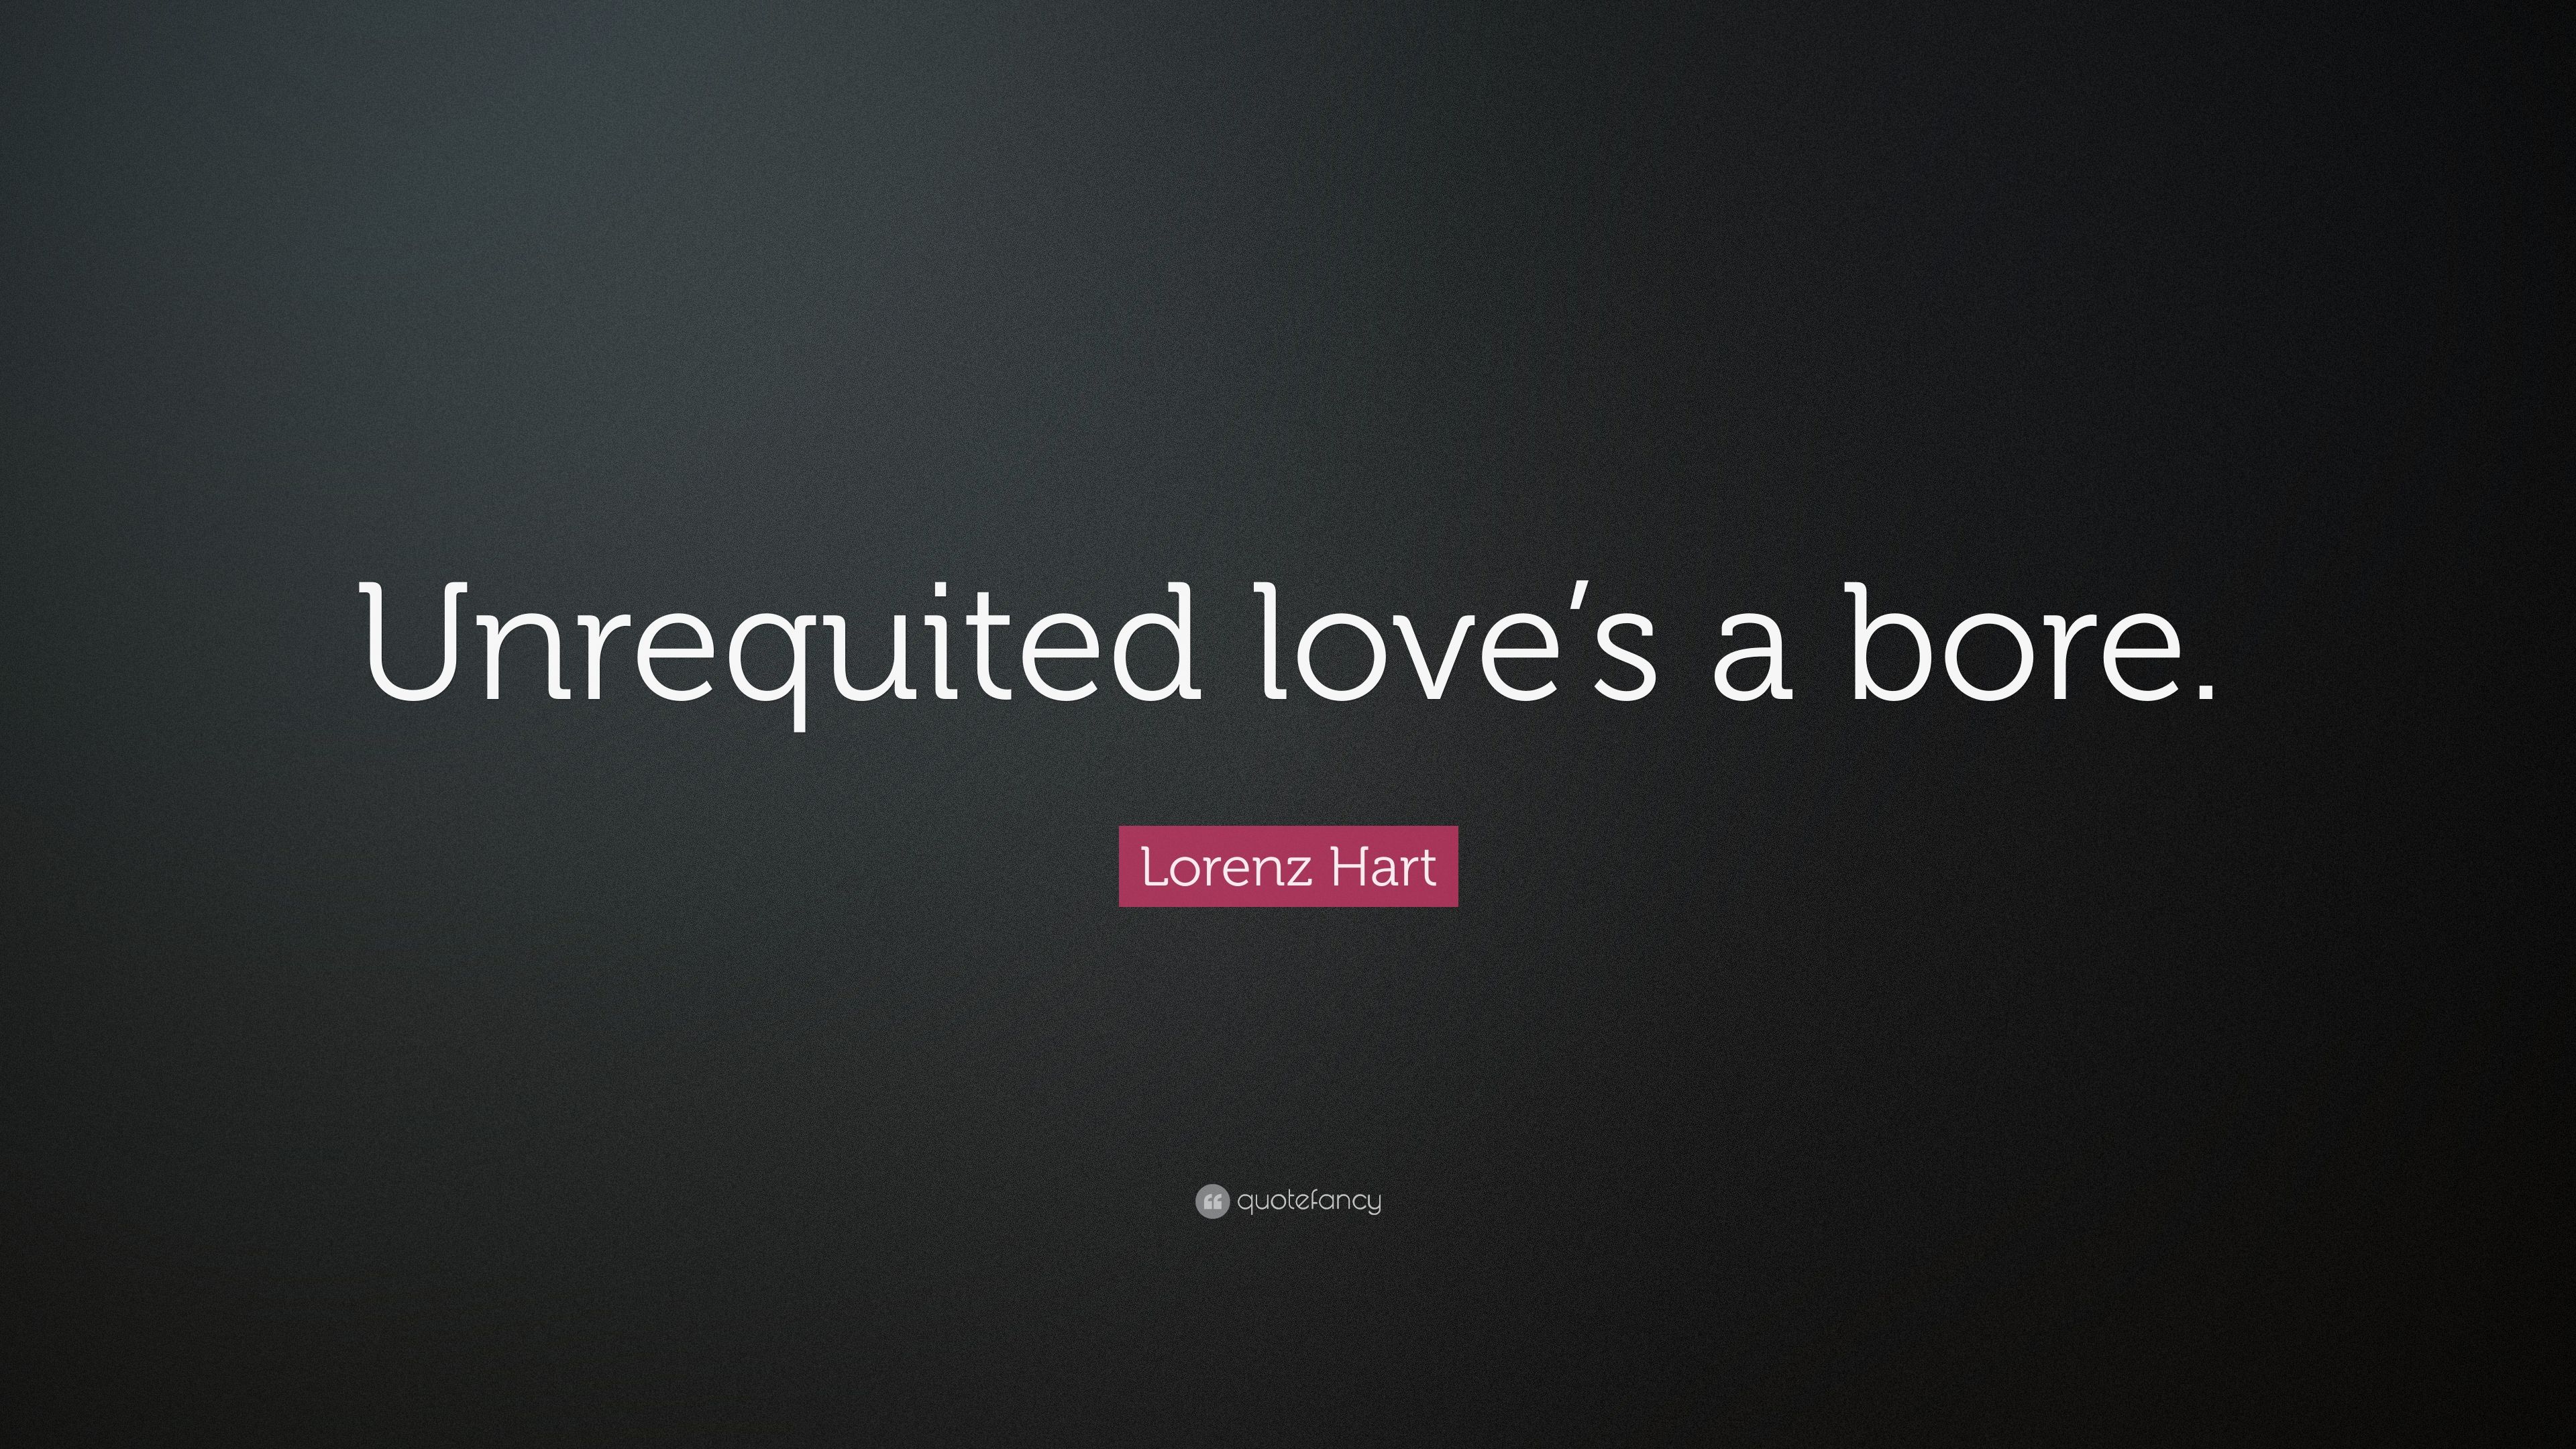 Lorenz Hart Quote: “Unrequited love's a bore.” 7 wallpaper